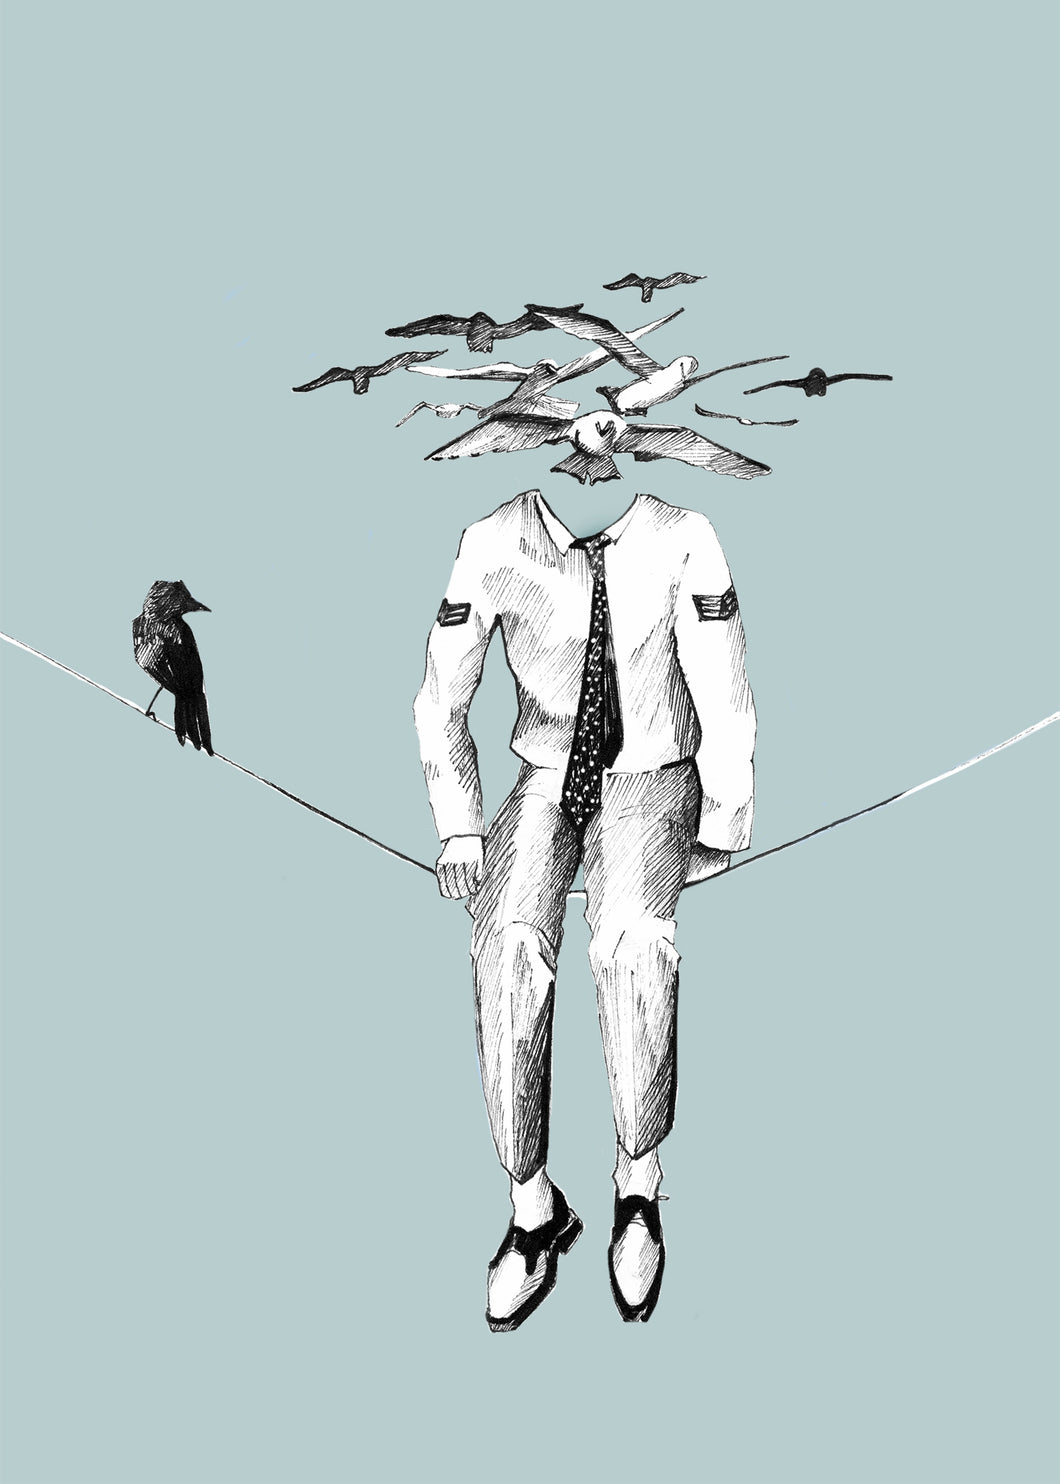 Birdman - About Face Illustration